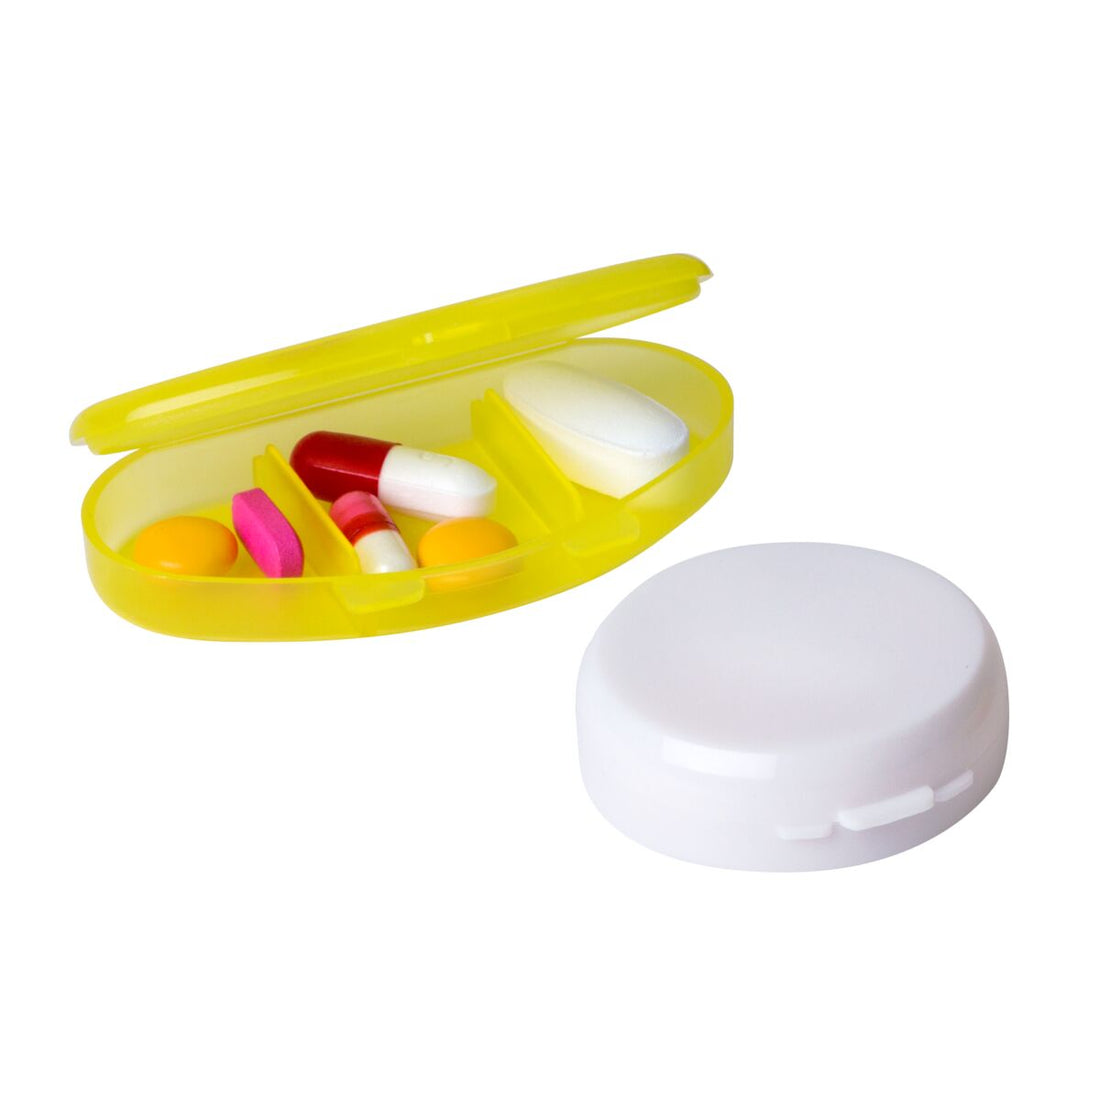 Portable Medicine Box Storage Organizer - FFGHS40713 - IdeaStage